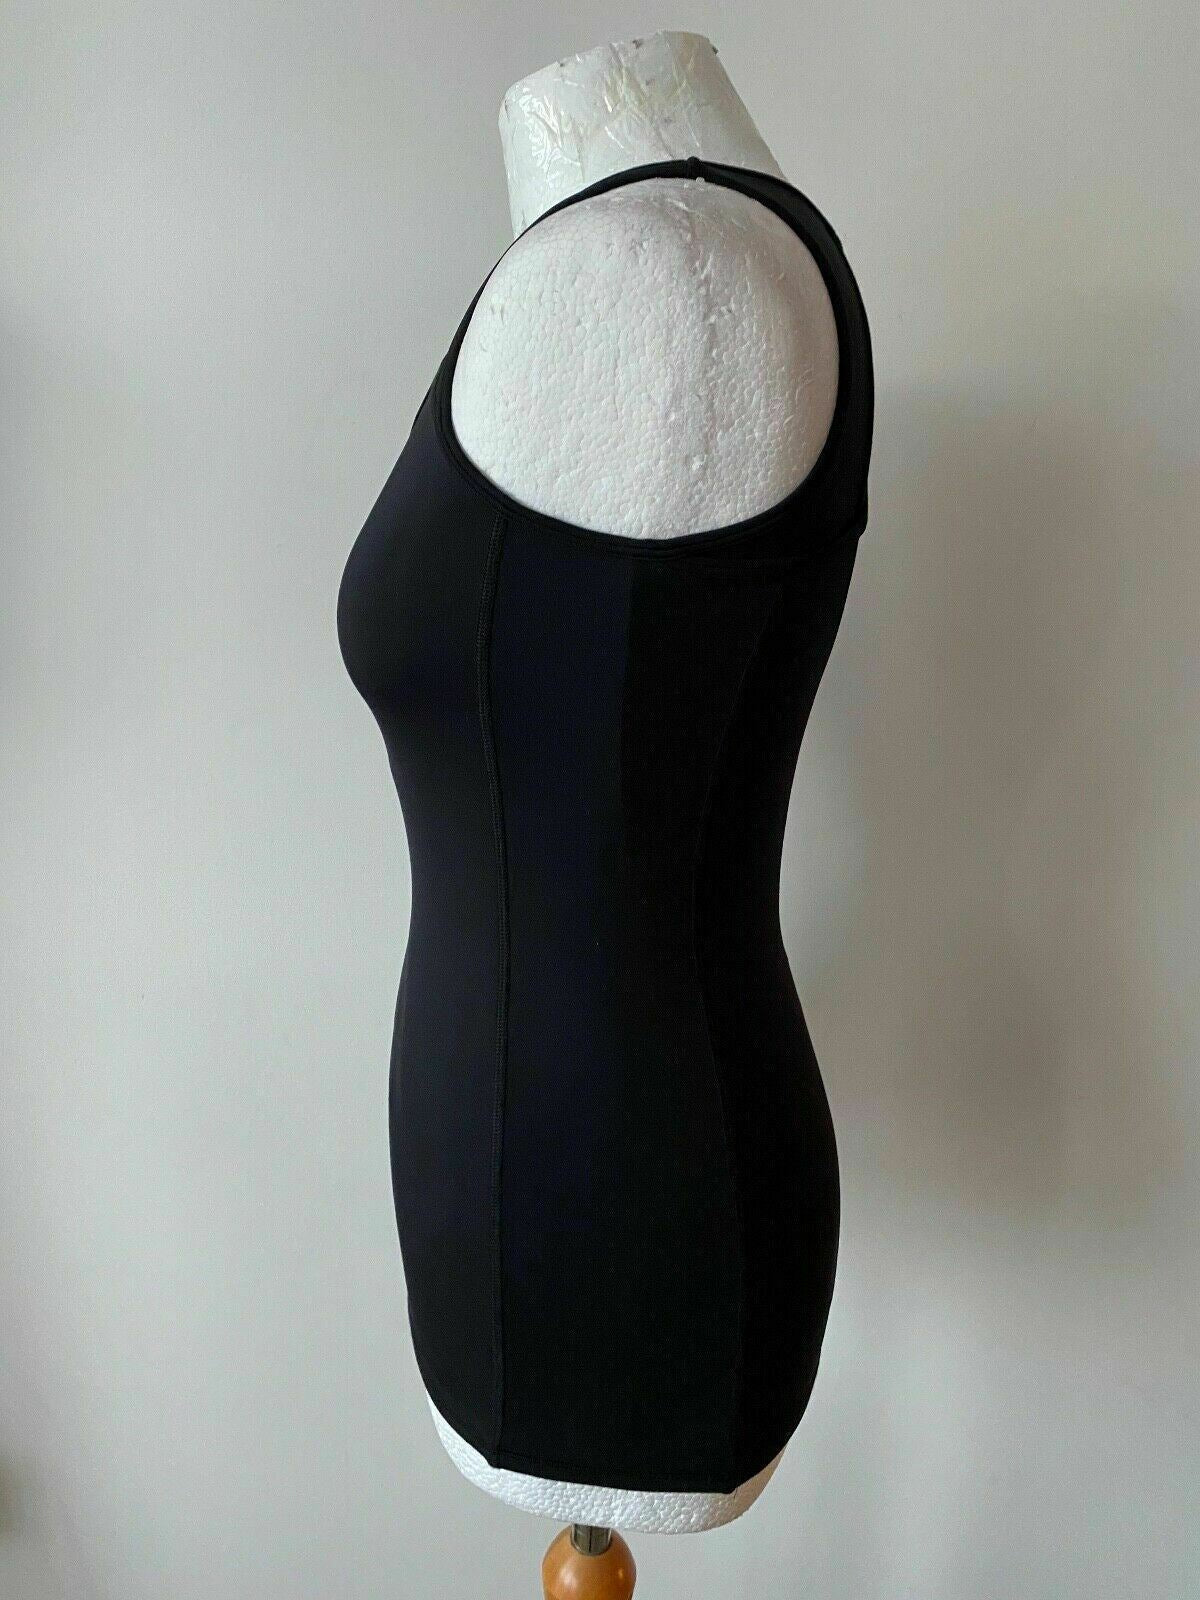 Sosandar Women's Black Sleeveless Layered Support Activewear top